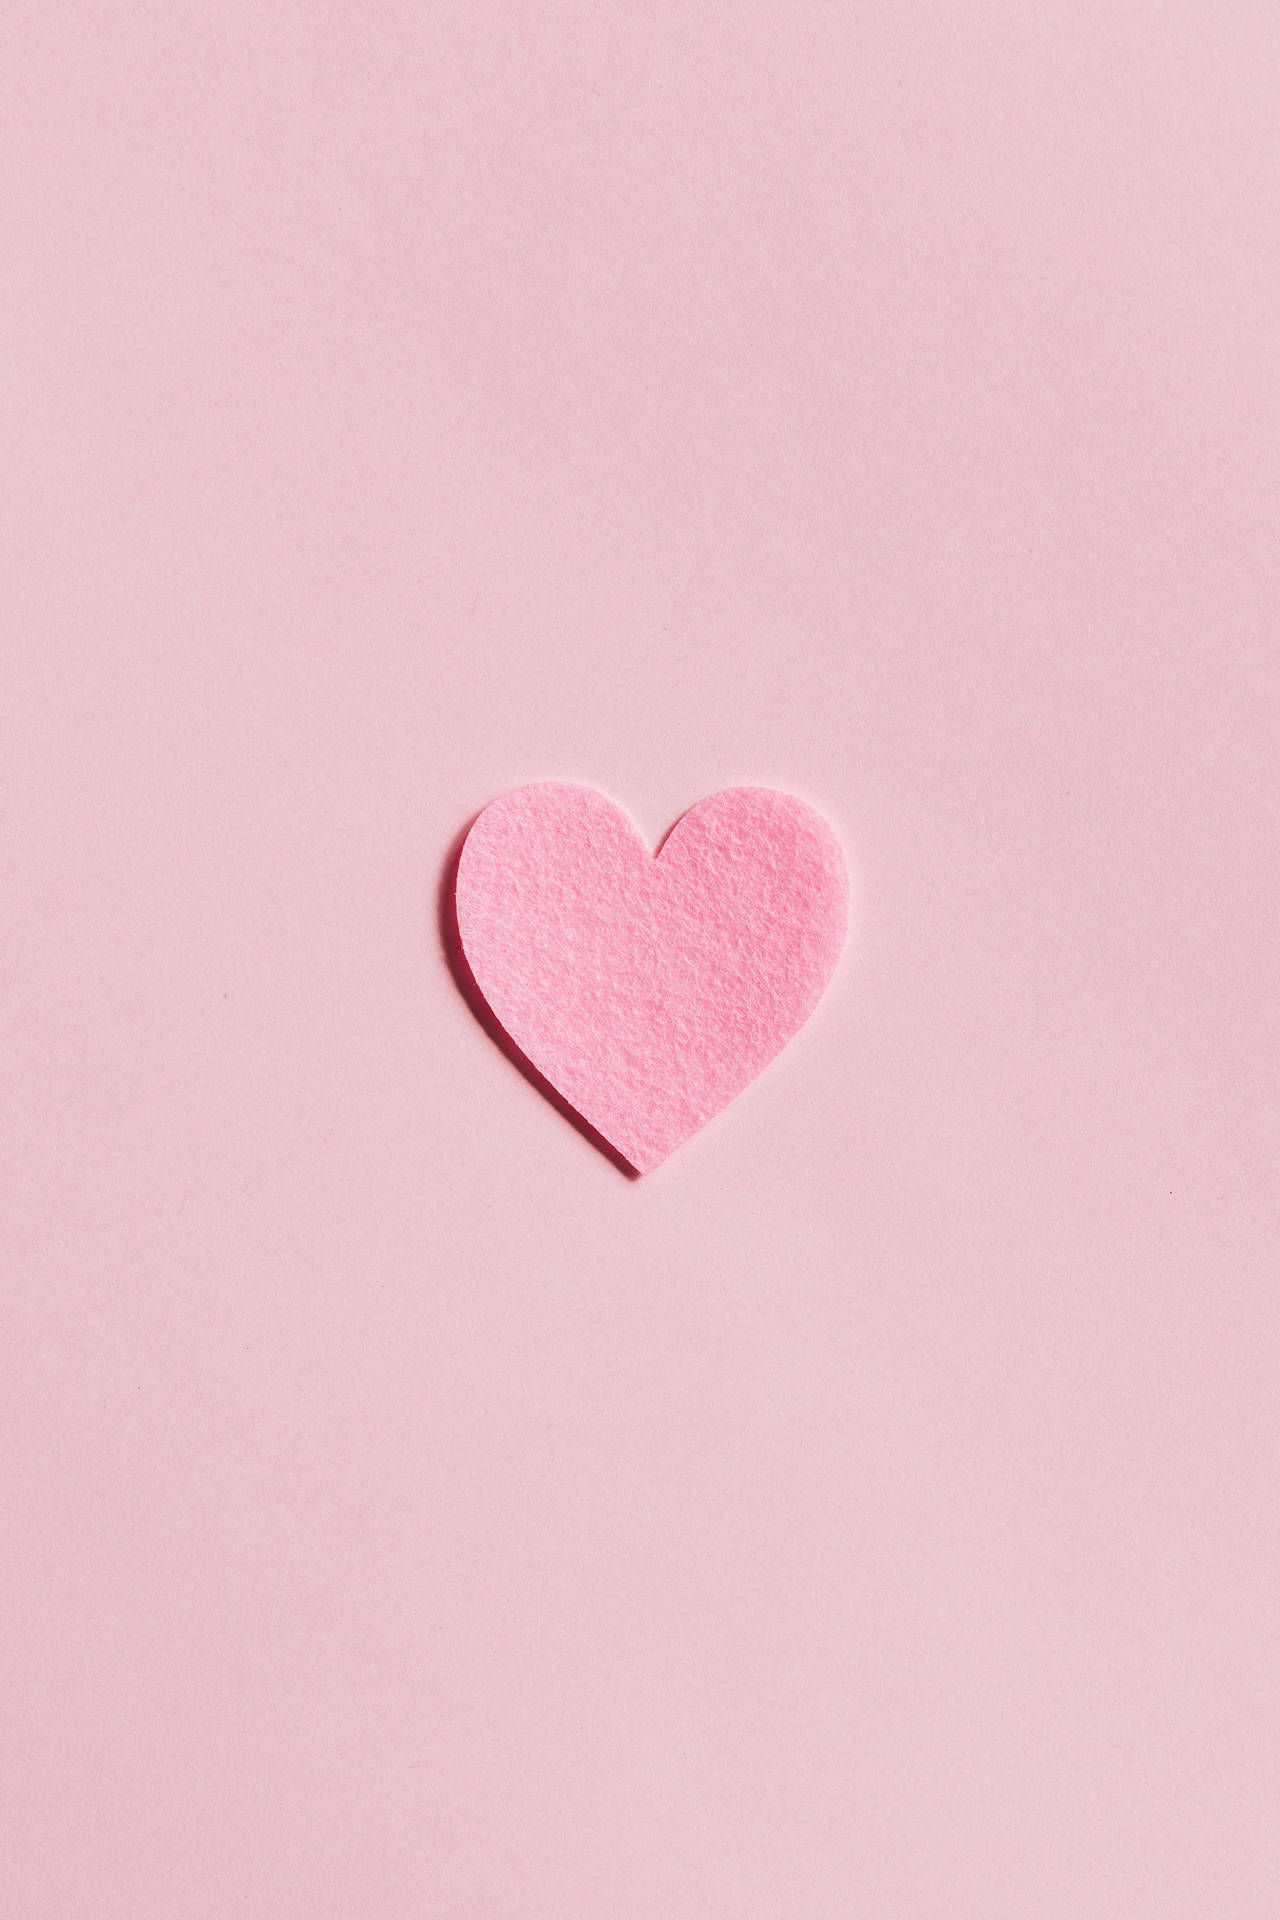 Little Pink Heart Background